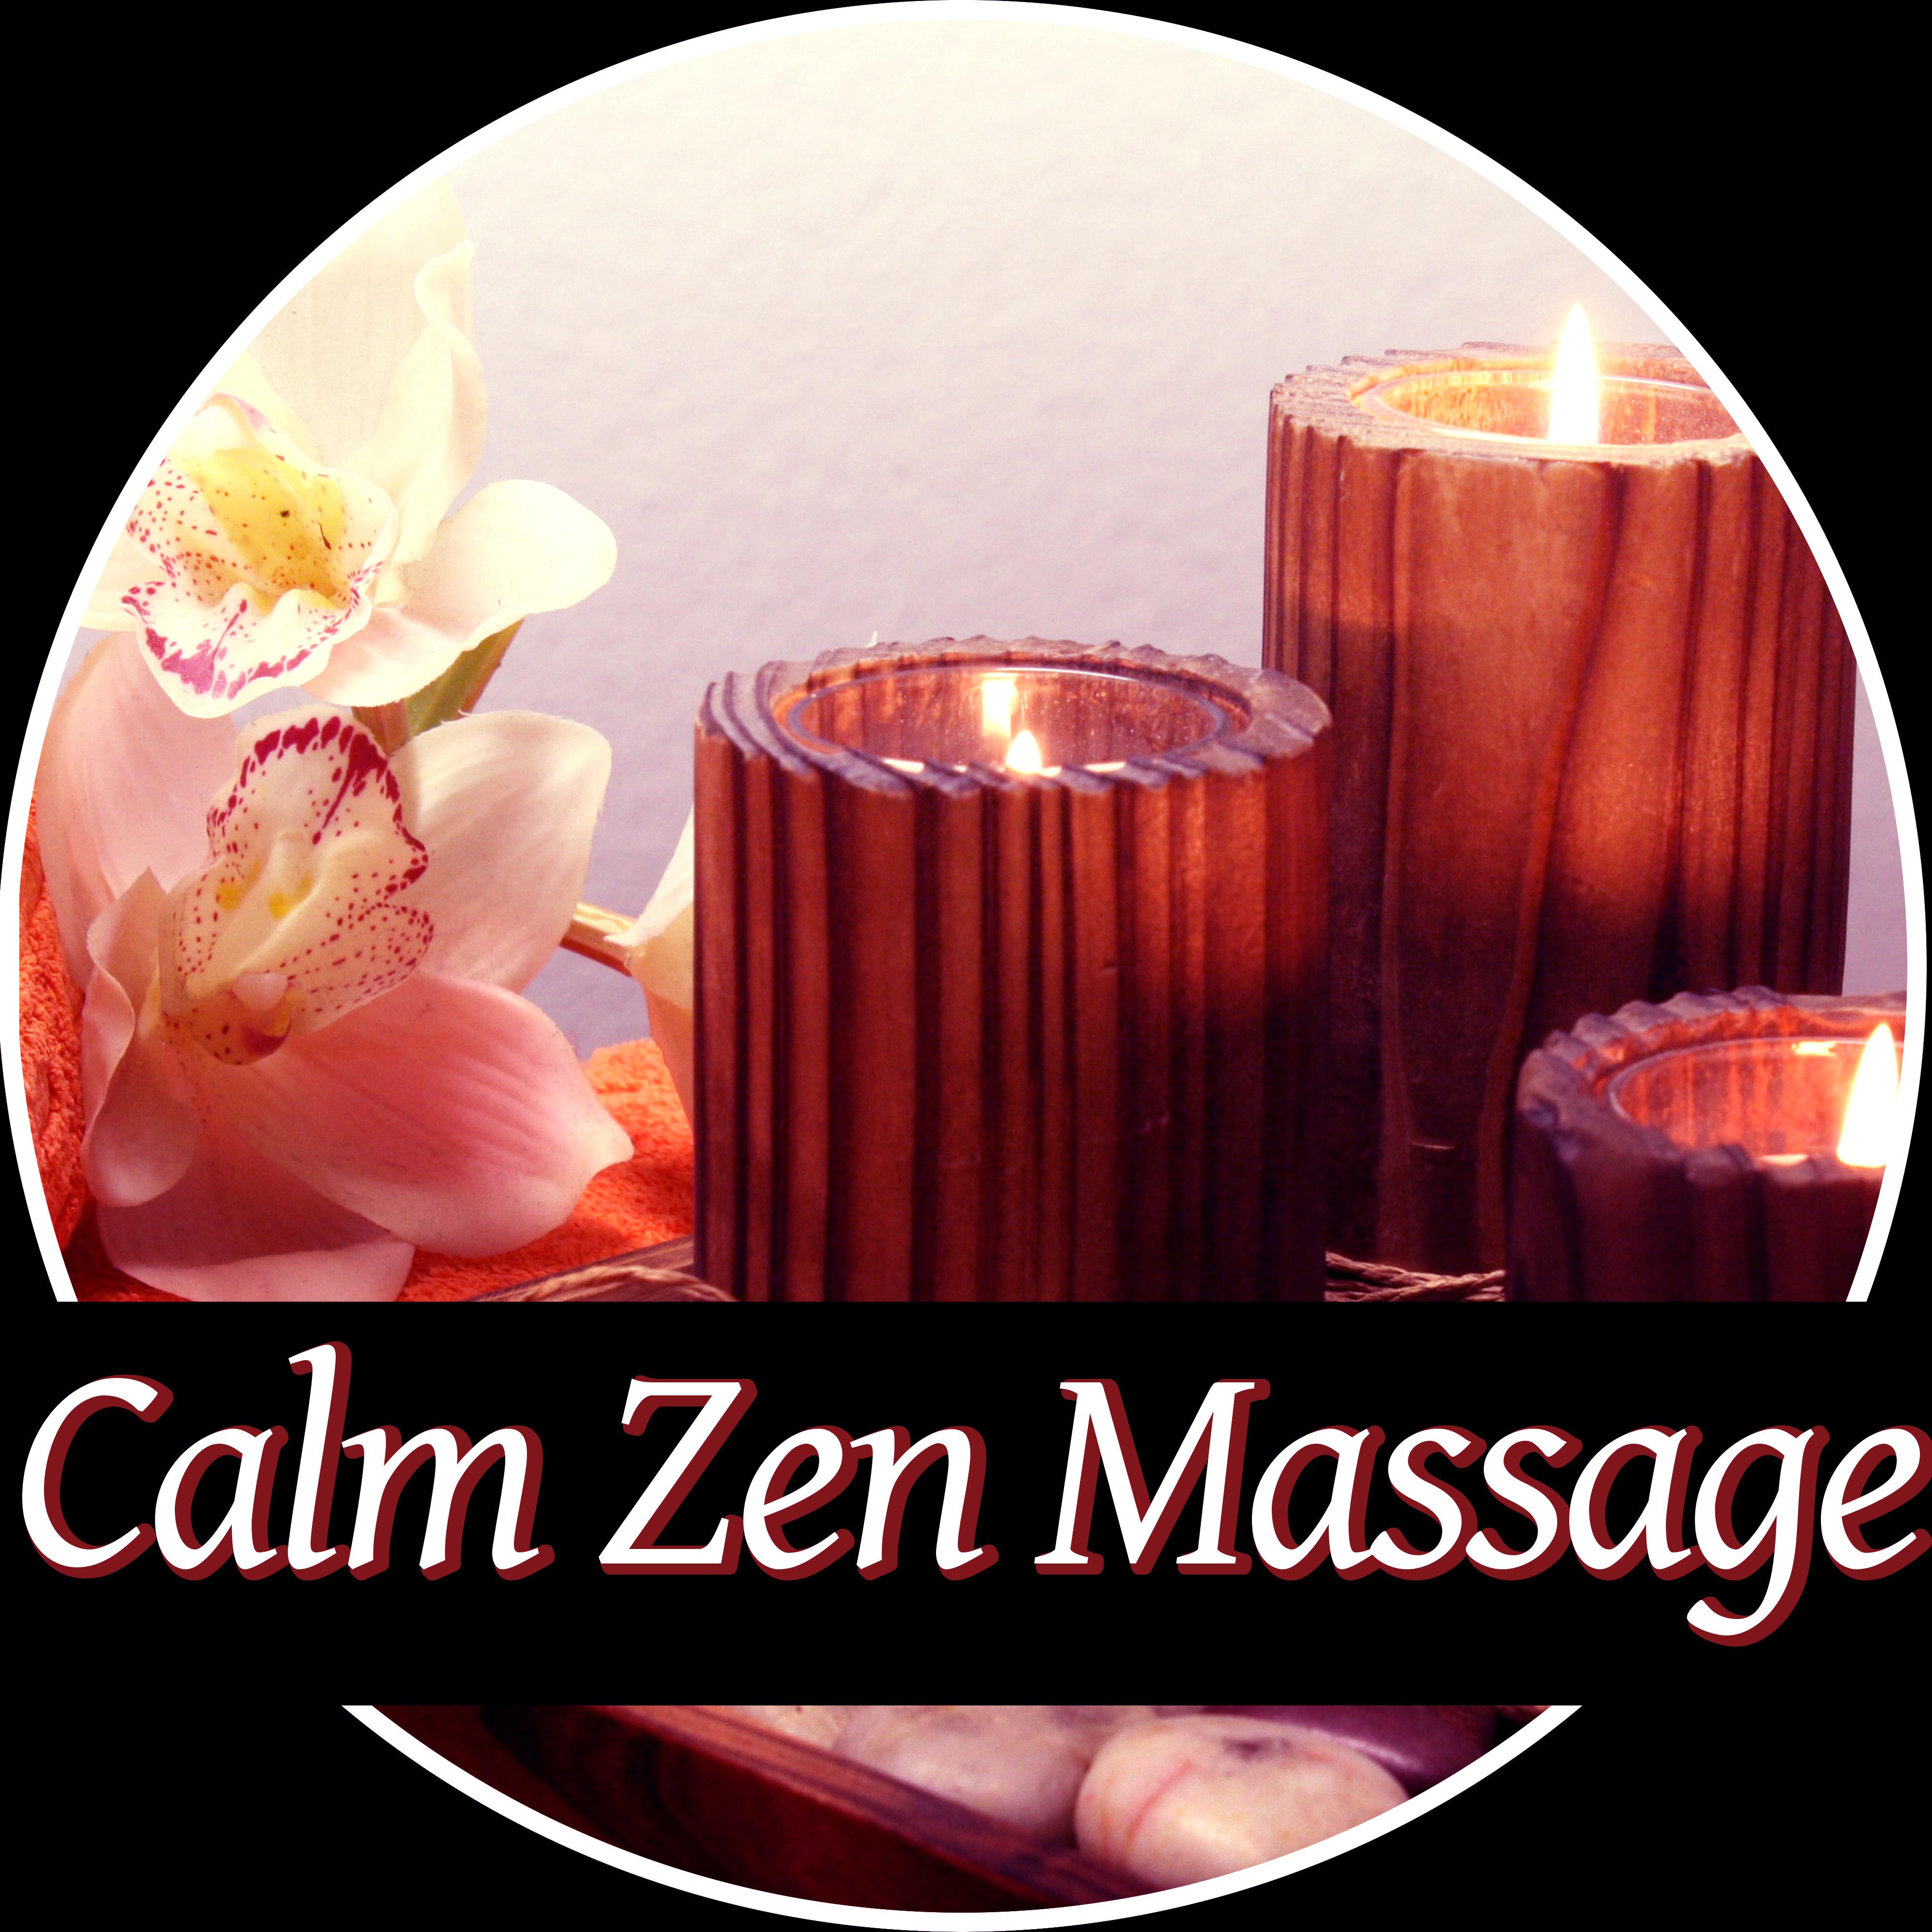 Calm Zen Massage - Positive Music for Mindfulness Meditation Practices, Namaste Yoga & Healing Sounds of Nature, Vital Energy